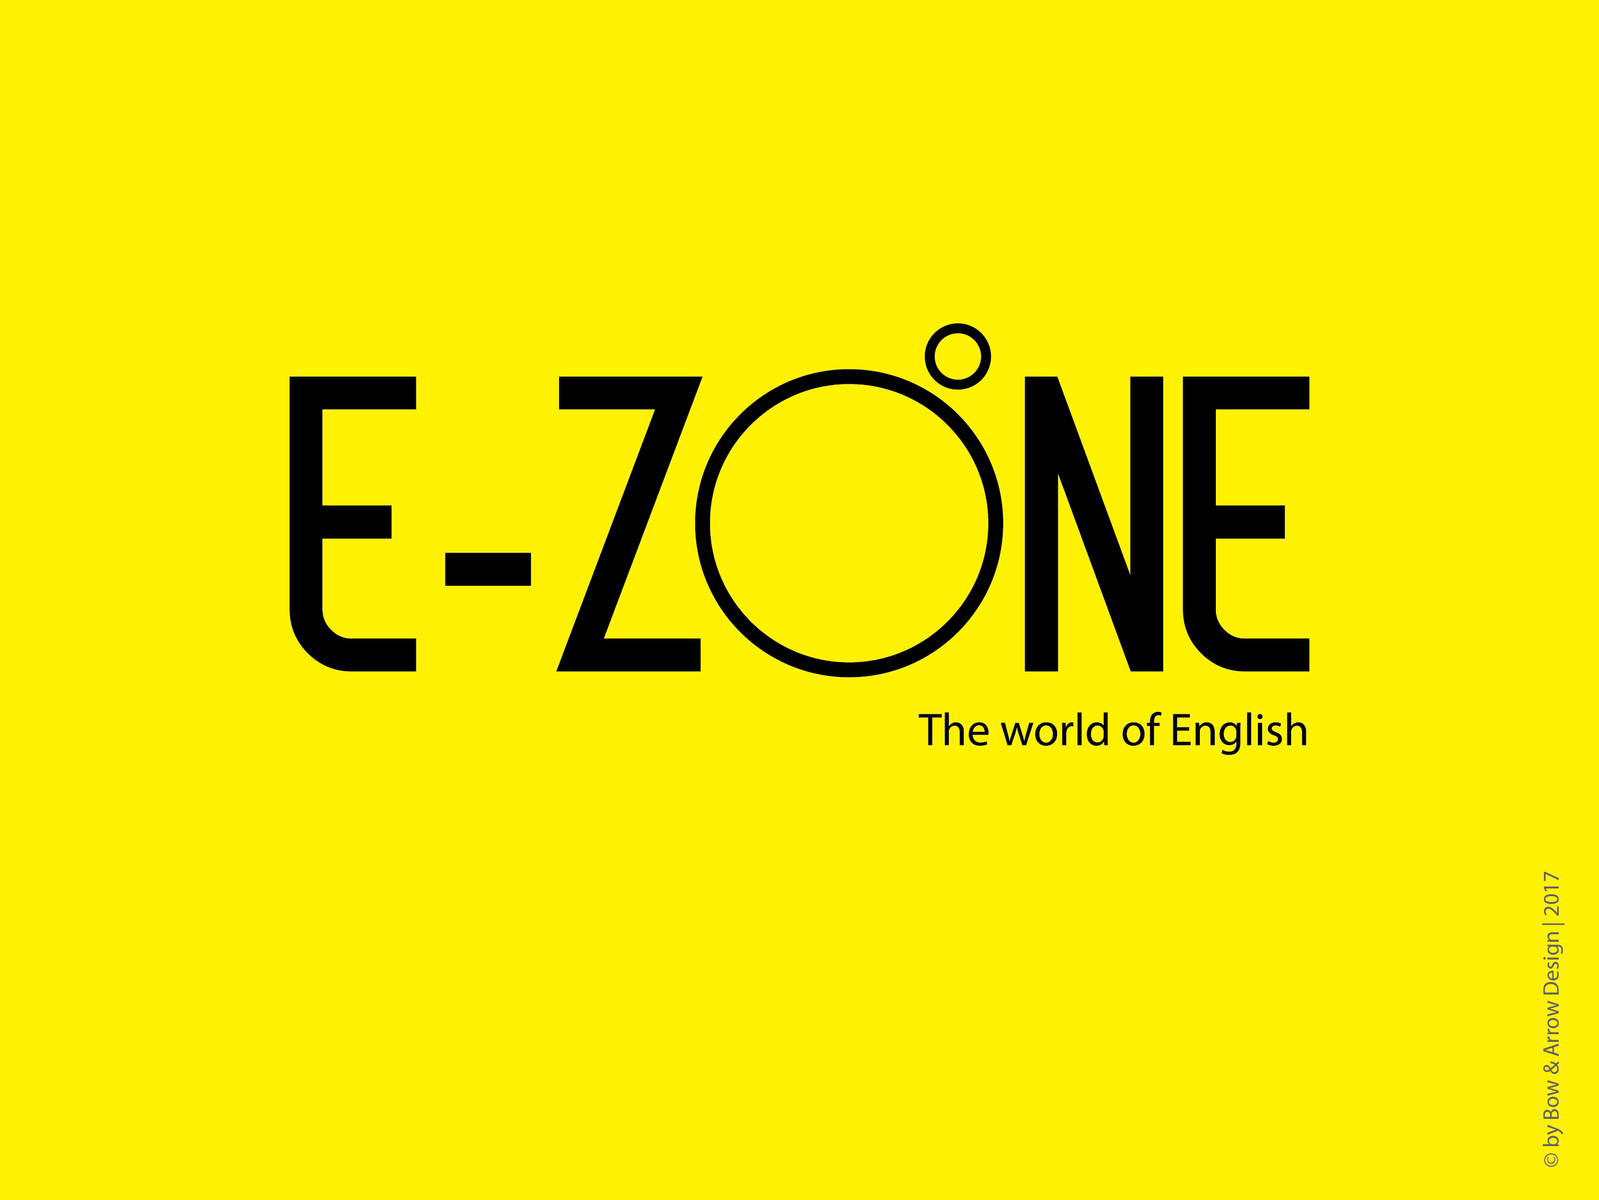 Logo Design E Zone The World Of English By Hardik Chanchad On Dribbble